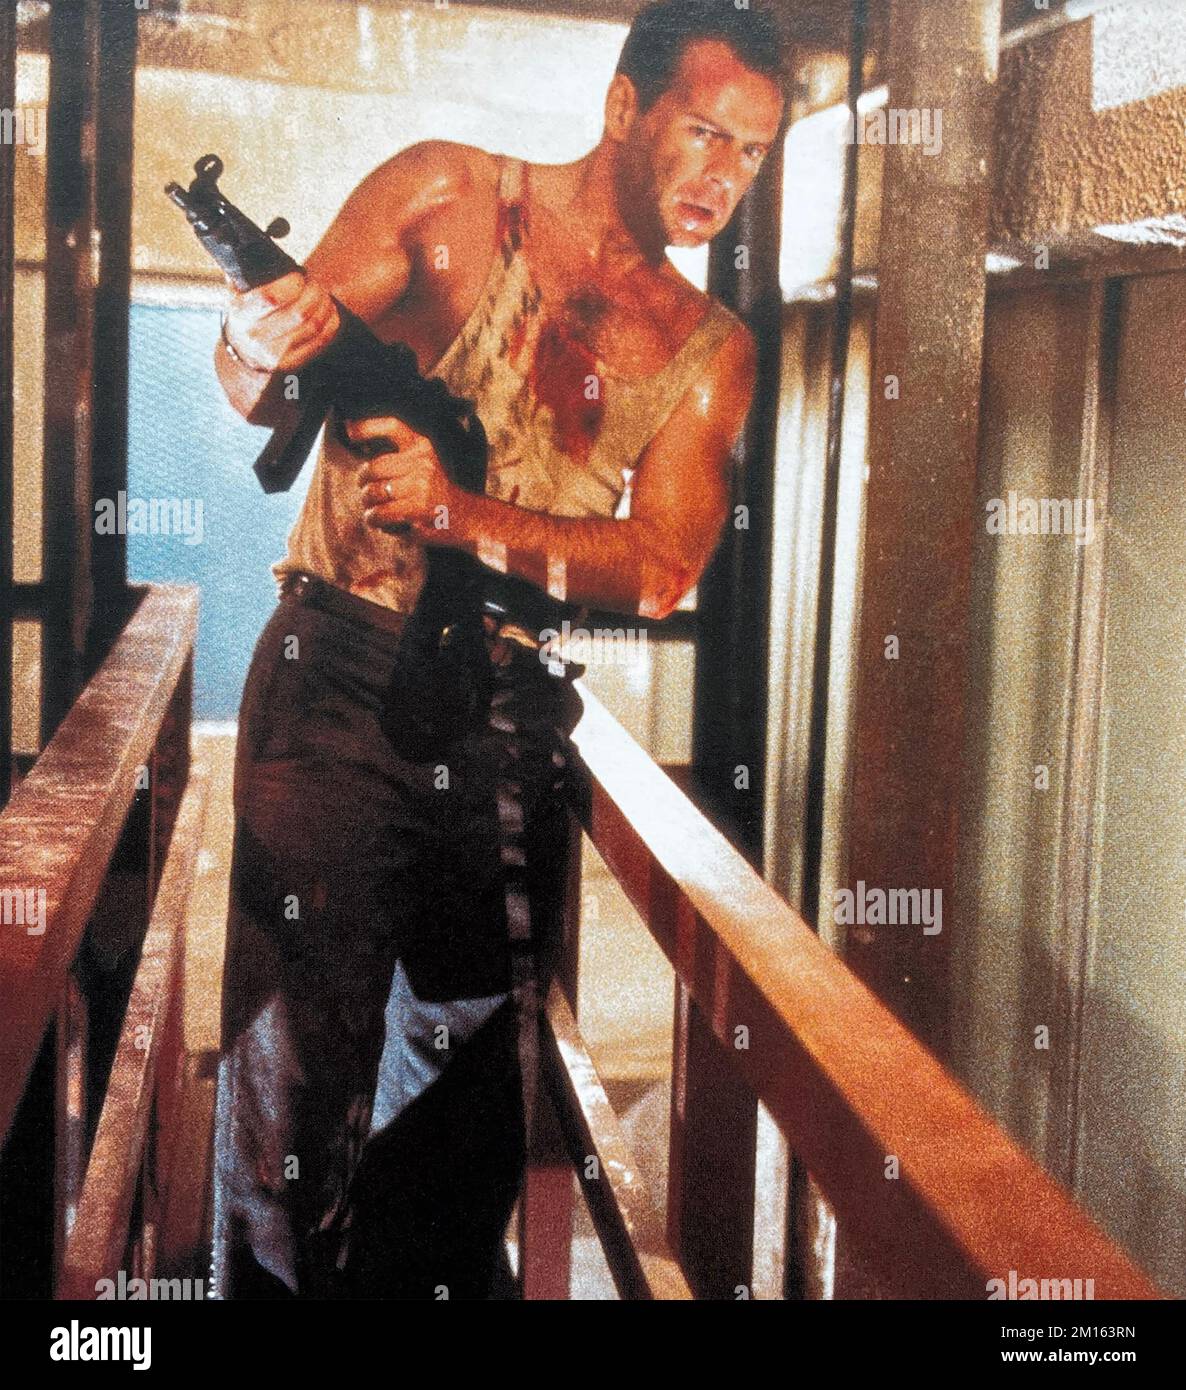 DIE HARD 1988 20th Century Fox film with Bruce Willis Stock Photo